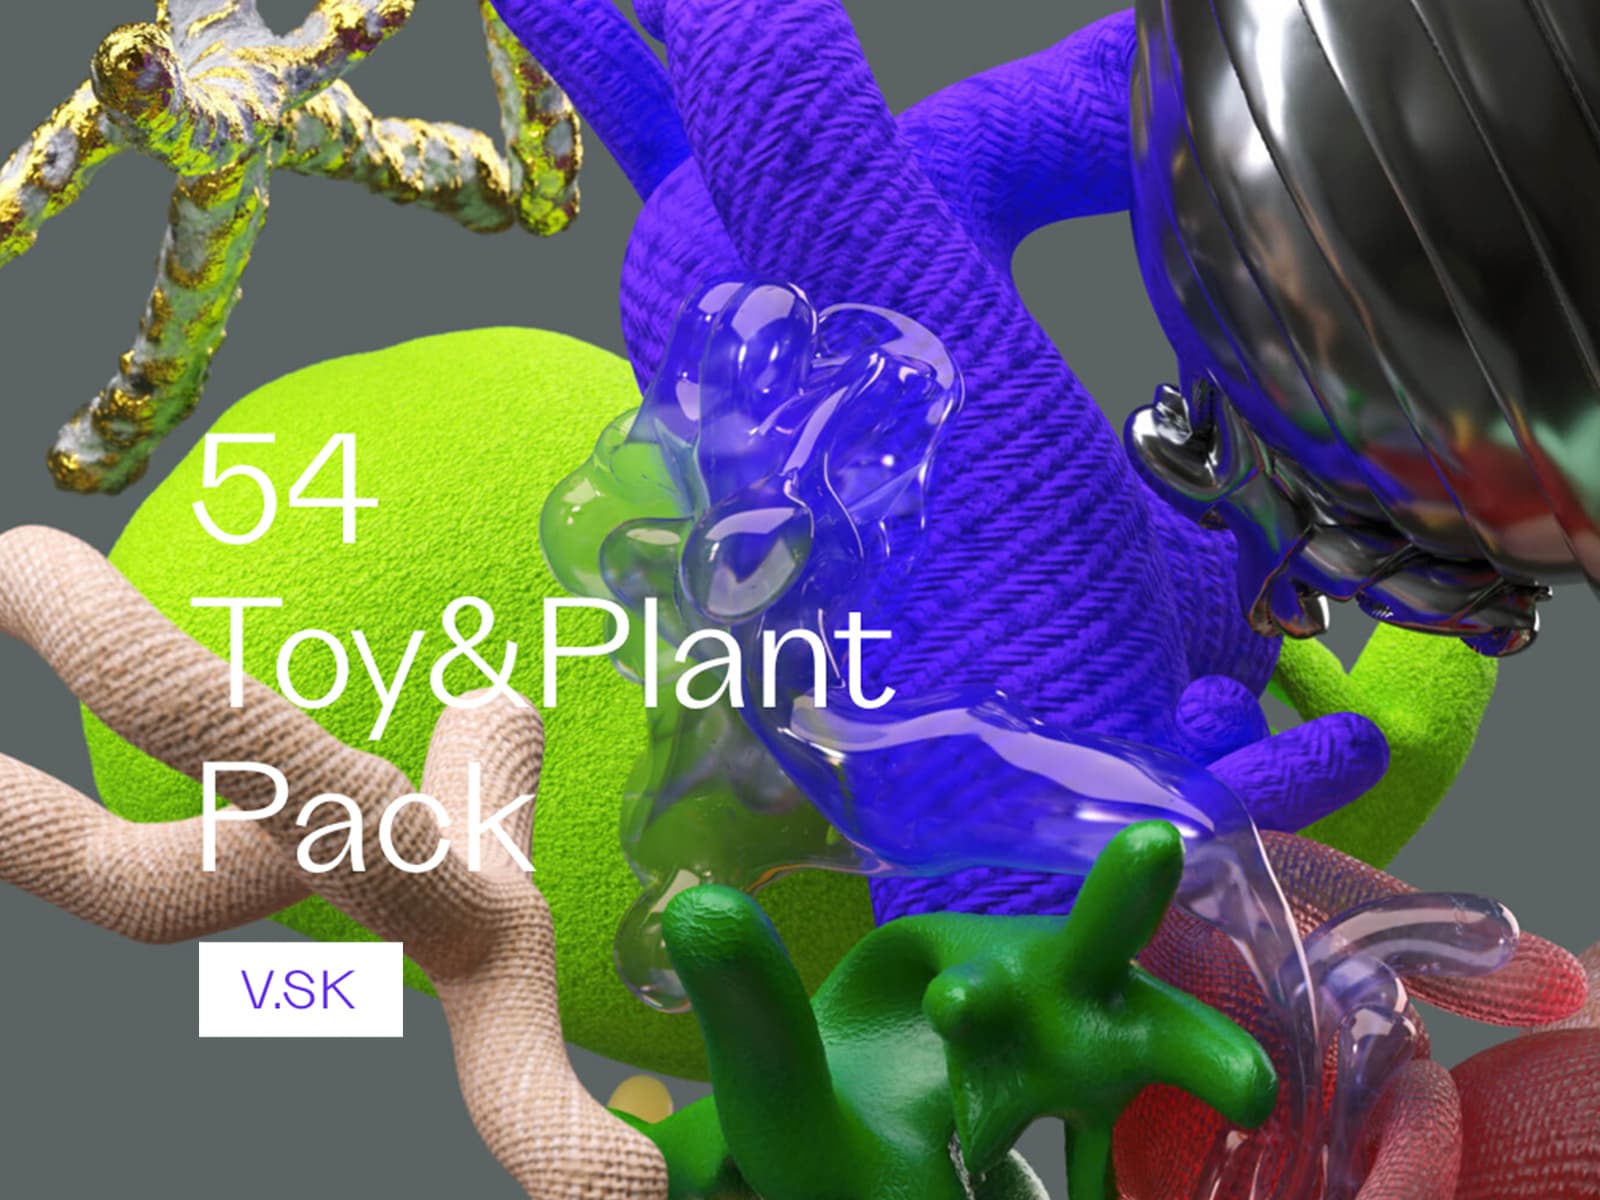 V.SK Toy & Plant Pack